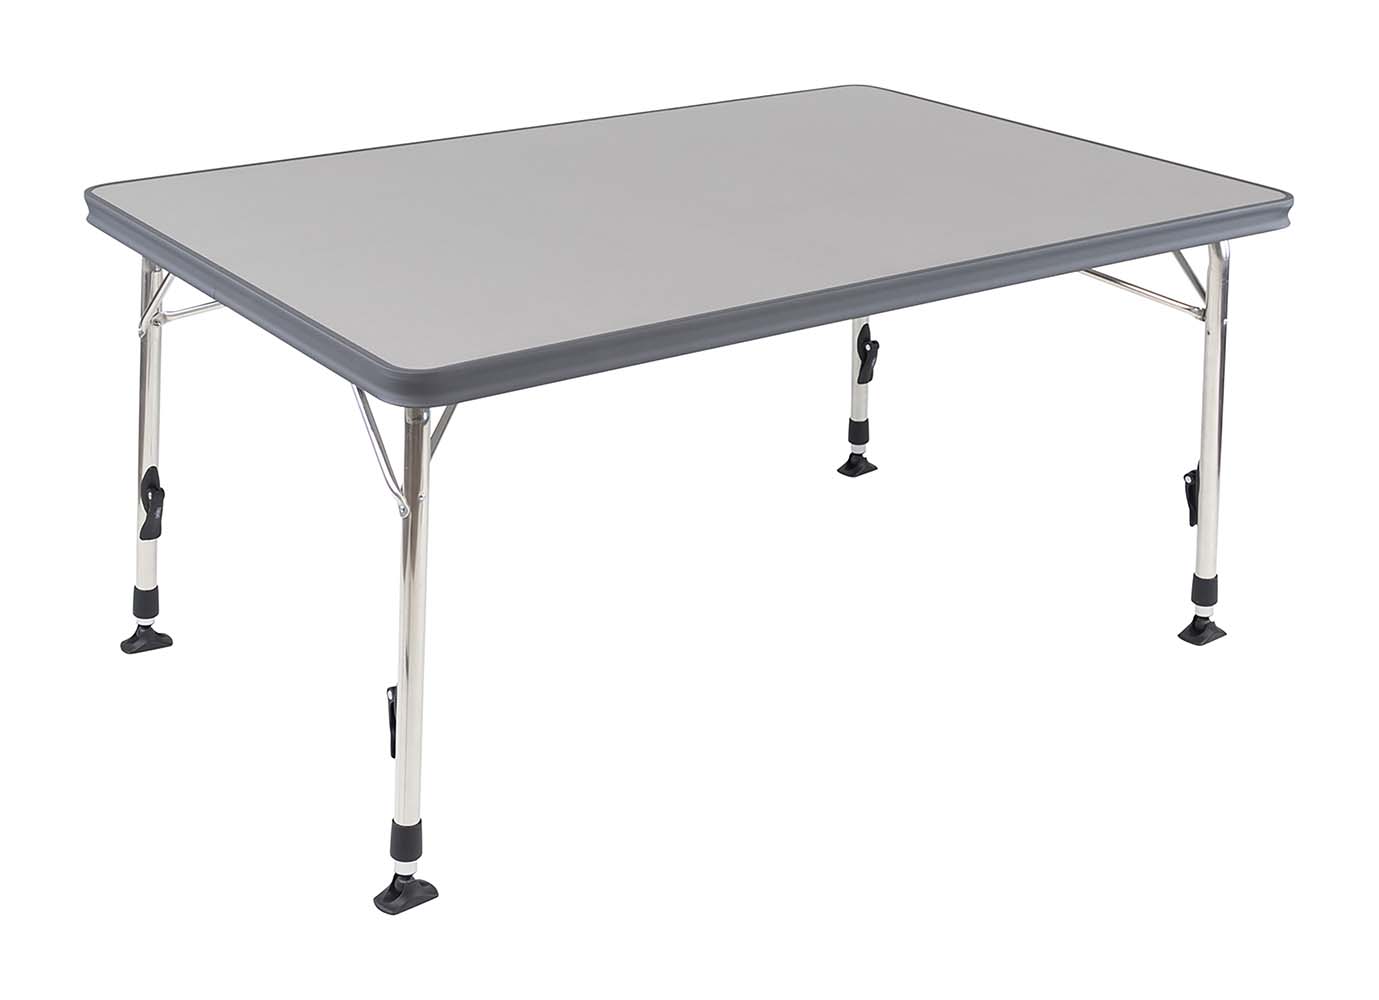 Crespo - Table - AL/273 - 130x85 cm - Grey detail 2